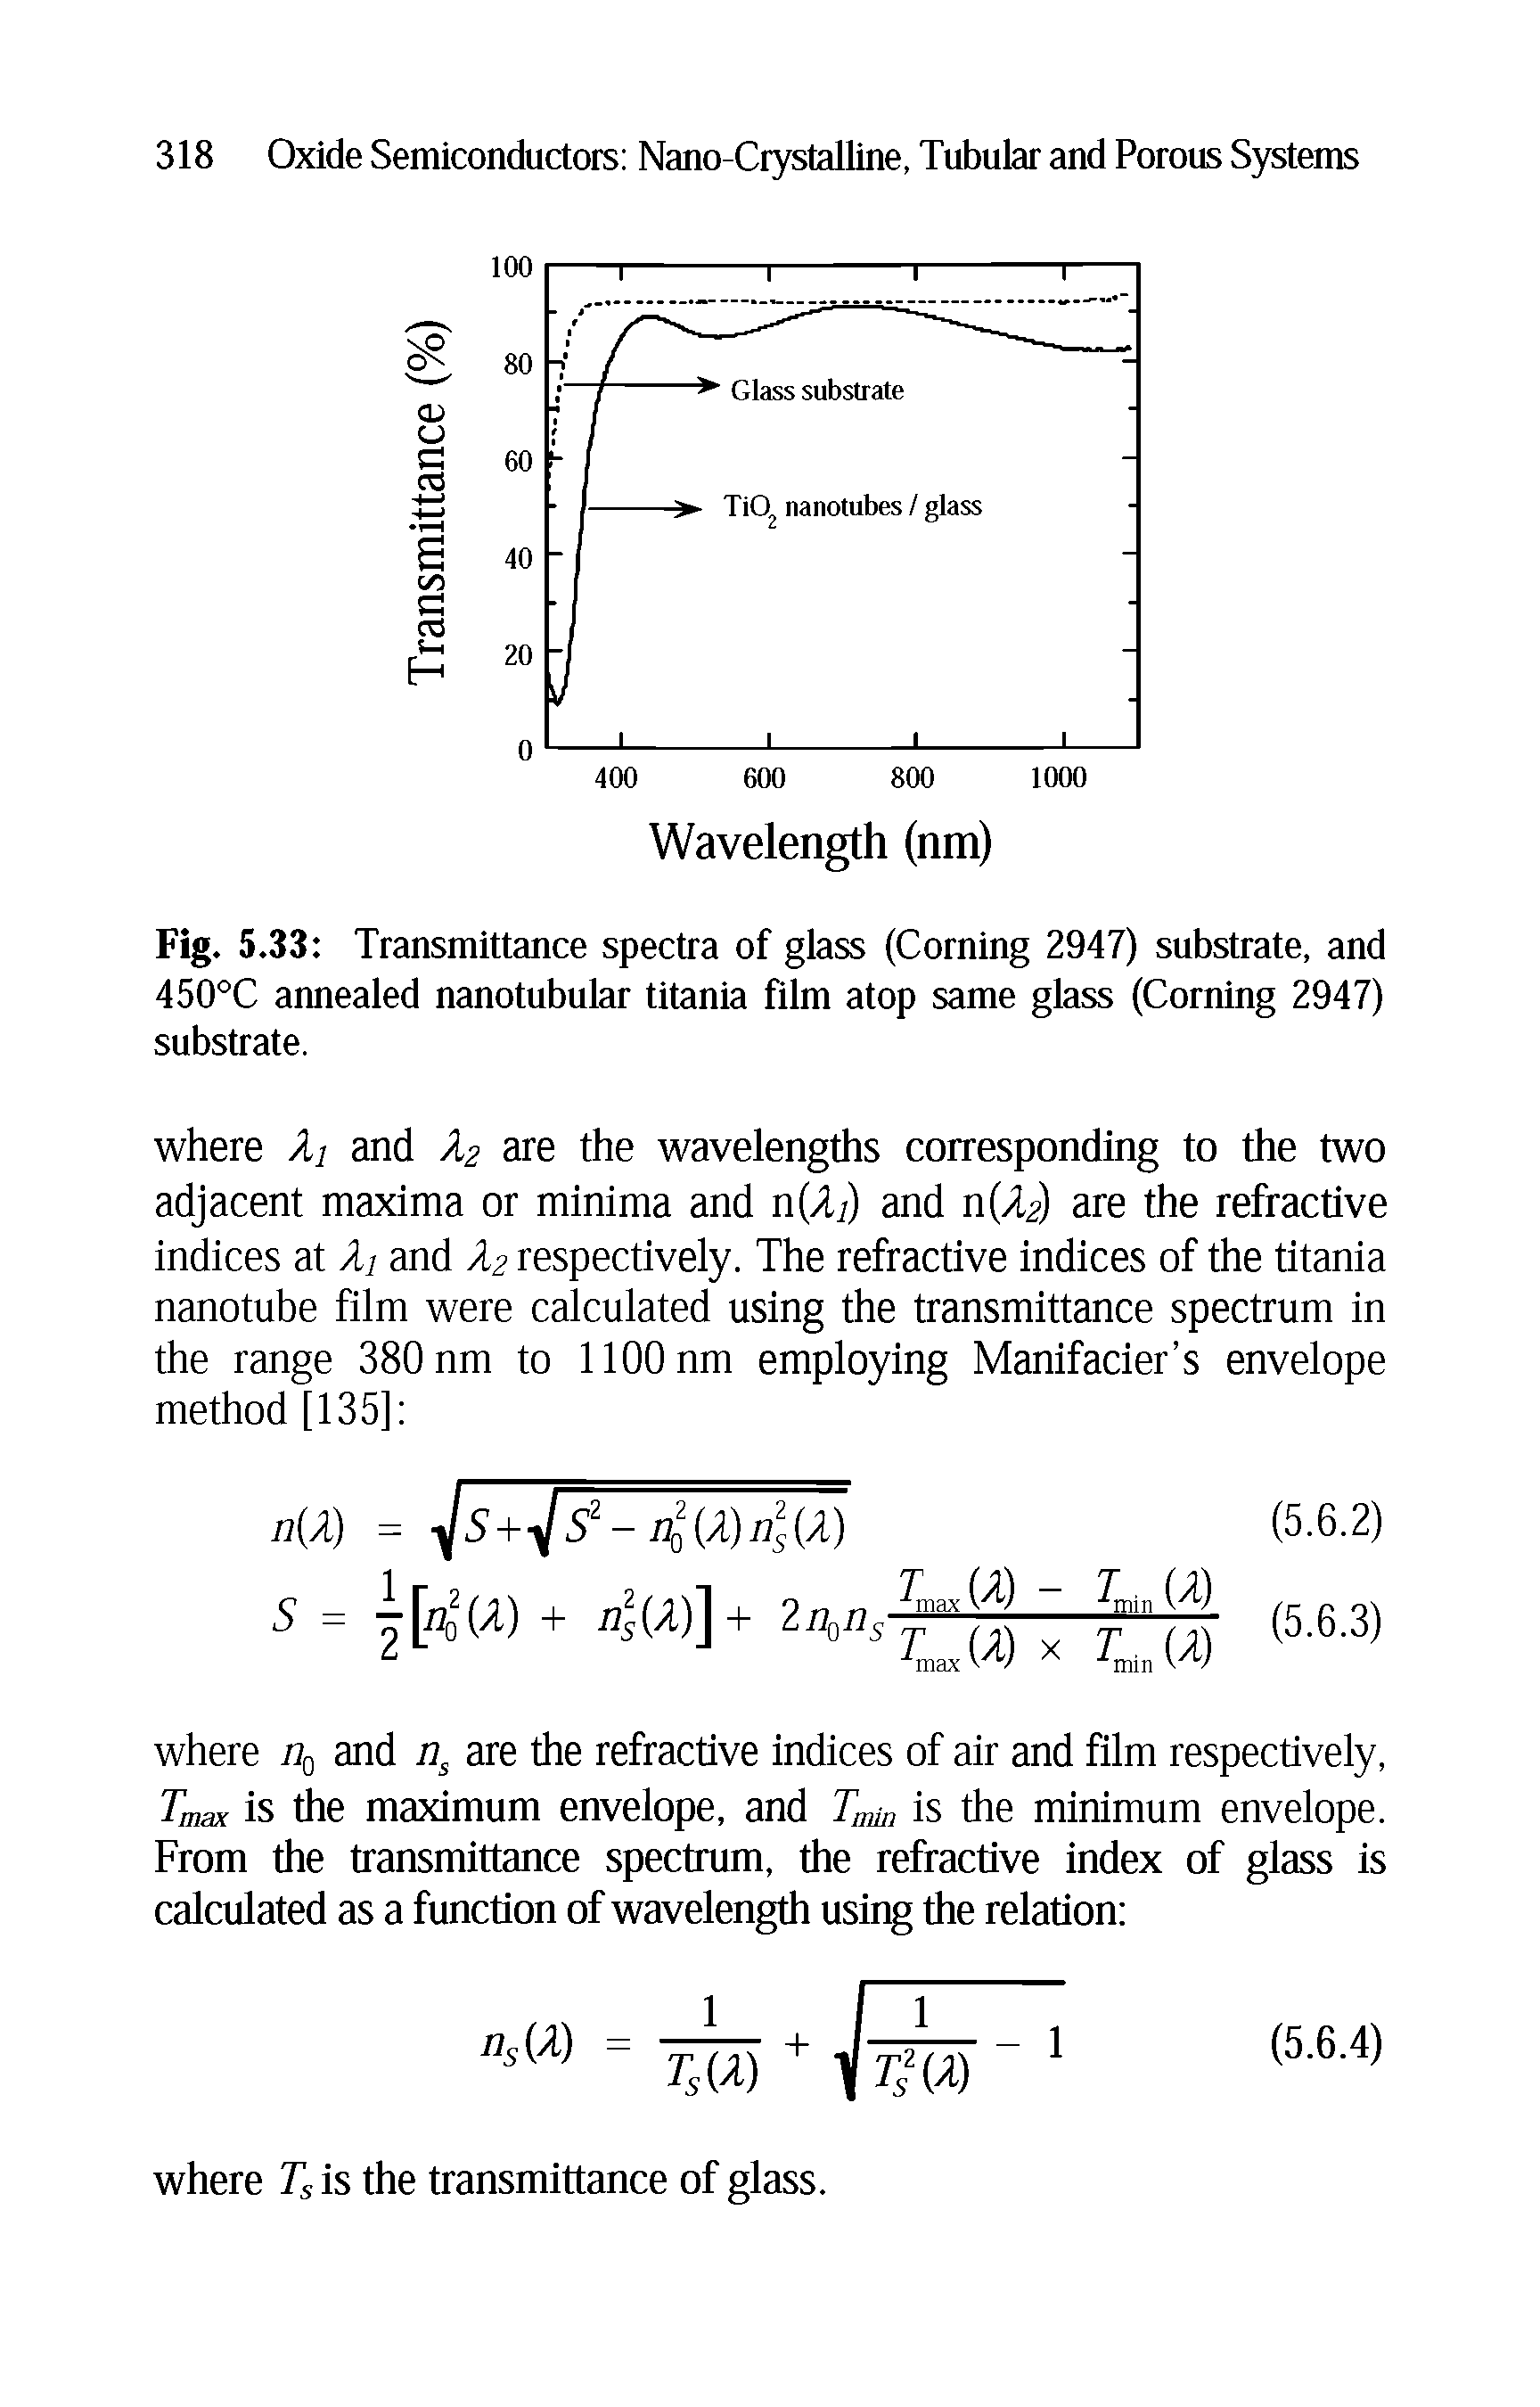 Fig. 5.33 Transmittance spectra of glass (Corning 2947) substrate, and 450°C aimealed nanotubular titania film atop same glass (Corning 2947) substrate.